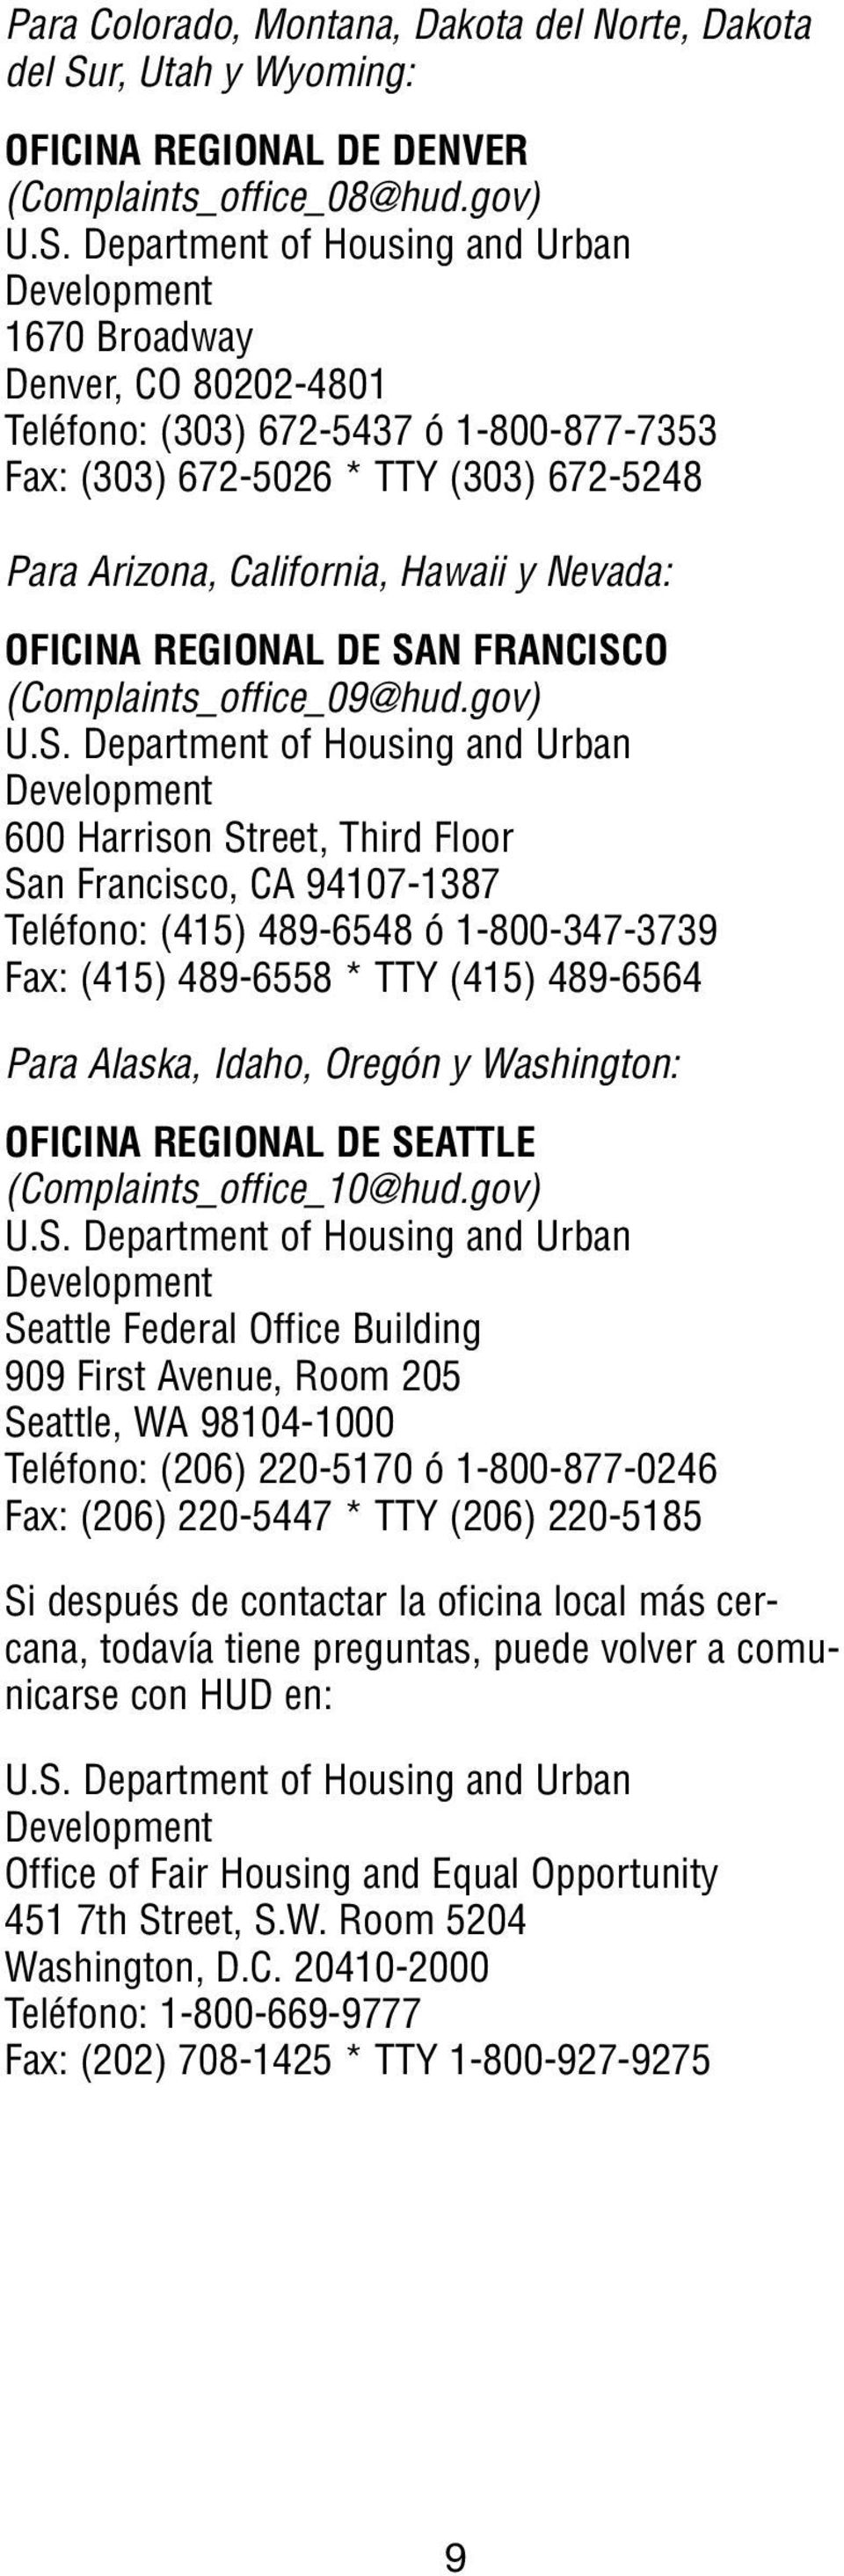 Department of Housing and Urban Development 1670 Broadway Denver, CO 80202-4801 Teléfono: (303) 672-5437 ó 1-800-877-7353 Fax: (303) 672-5026 * TTY (303) 672-5248 Para Arizona, California, Hawaii y